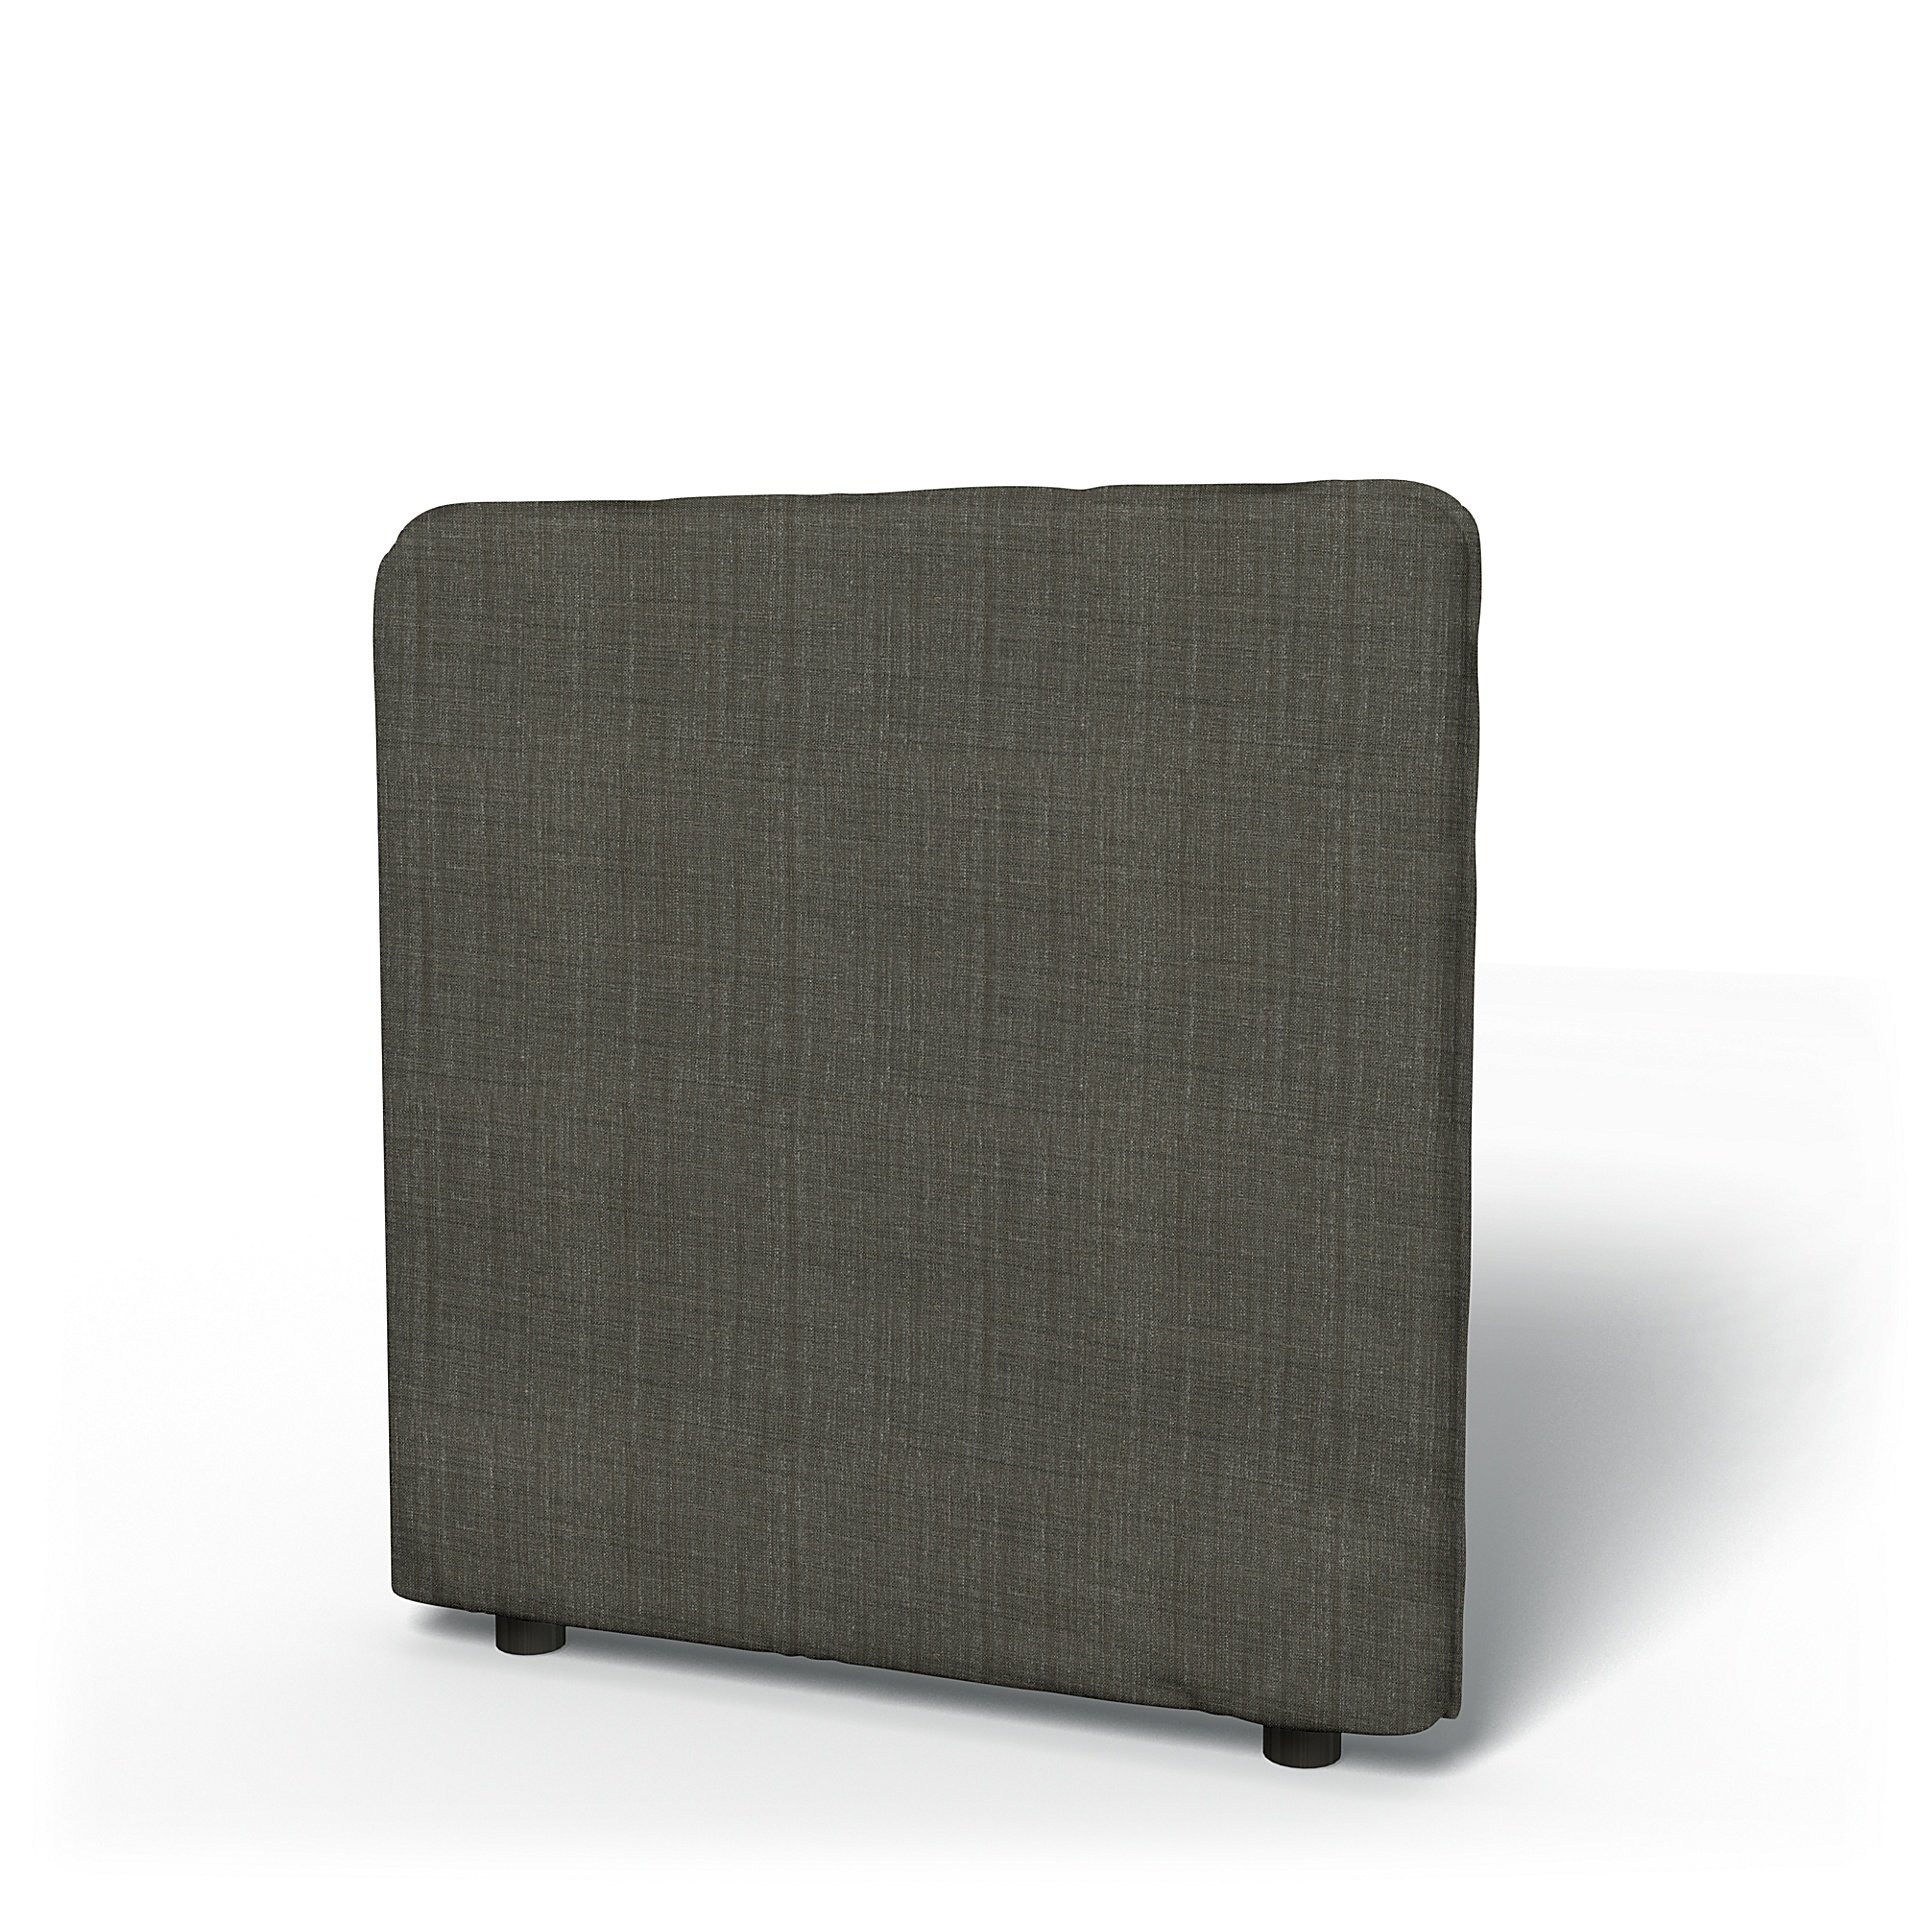 IKEA - Vallentuna Low Backrest Cover 80x80cm 32x32in, Mole Brown, Boucle & Texture - Bemz